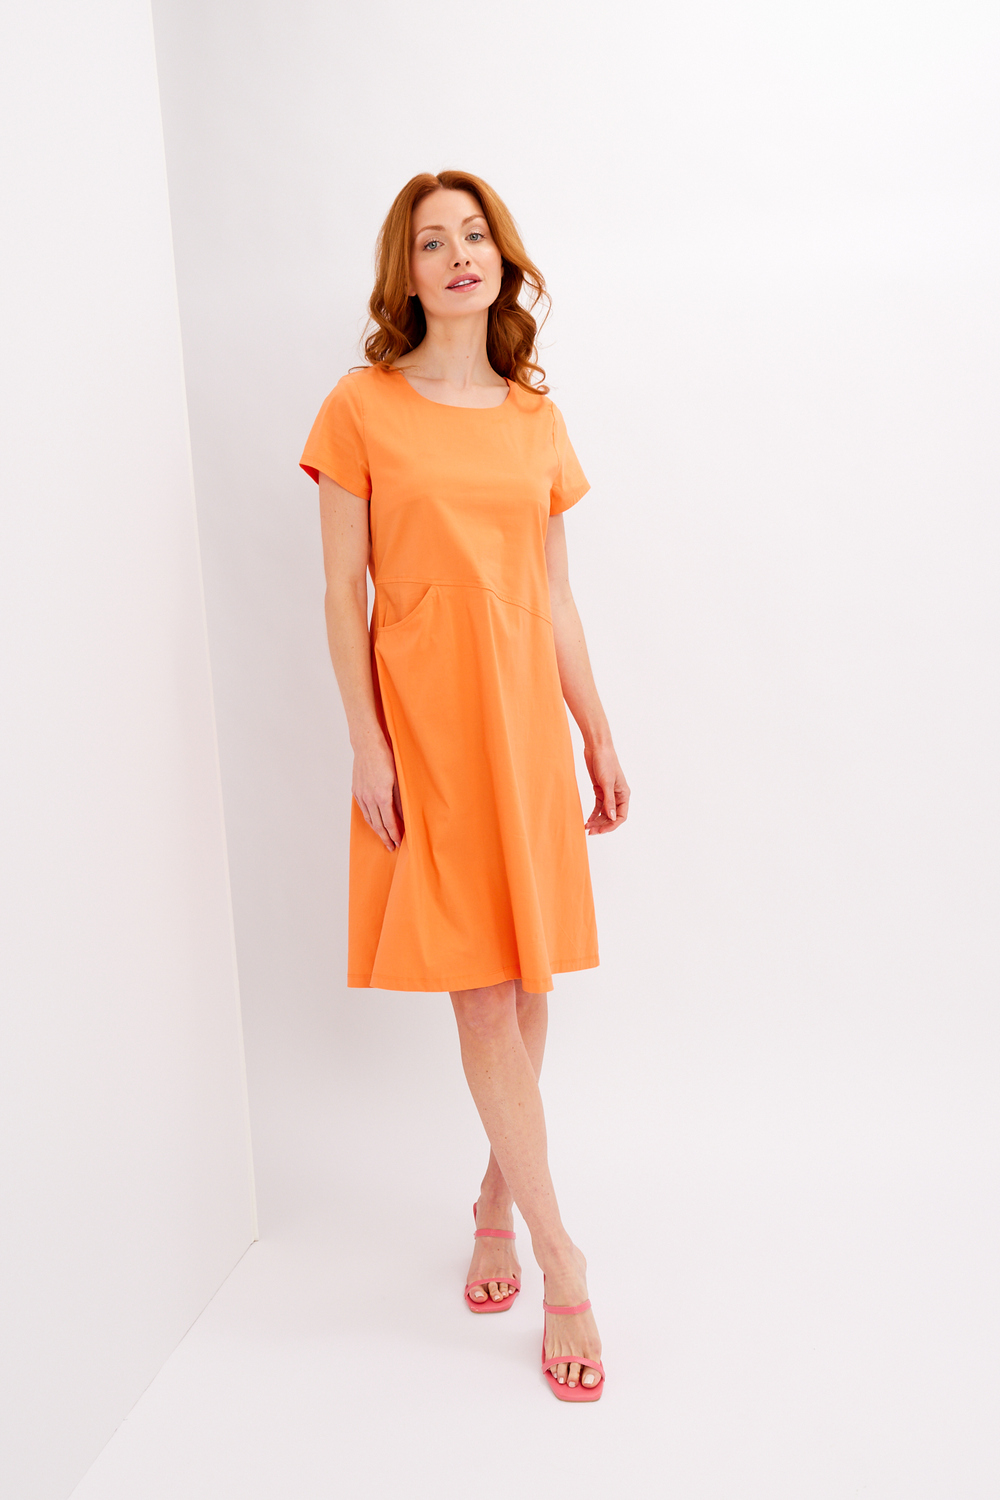 Robe d'été midi minimaliste modèle 24221. Orange